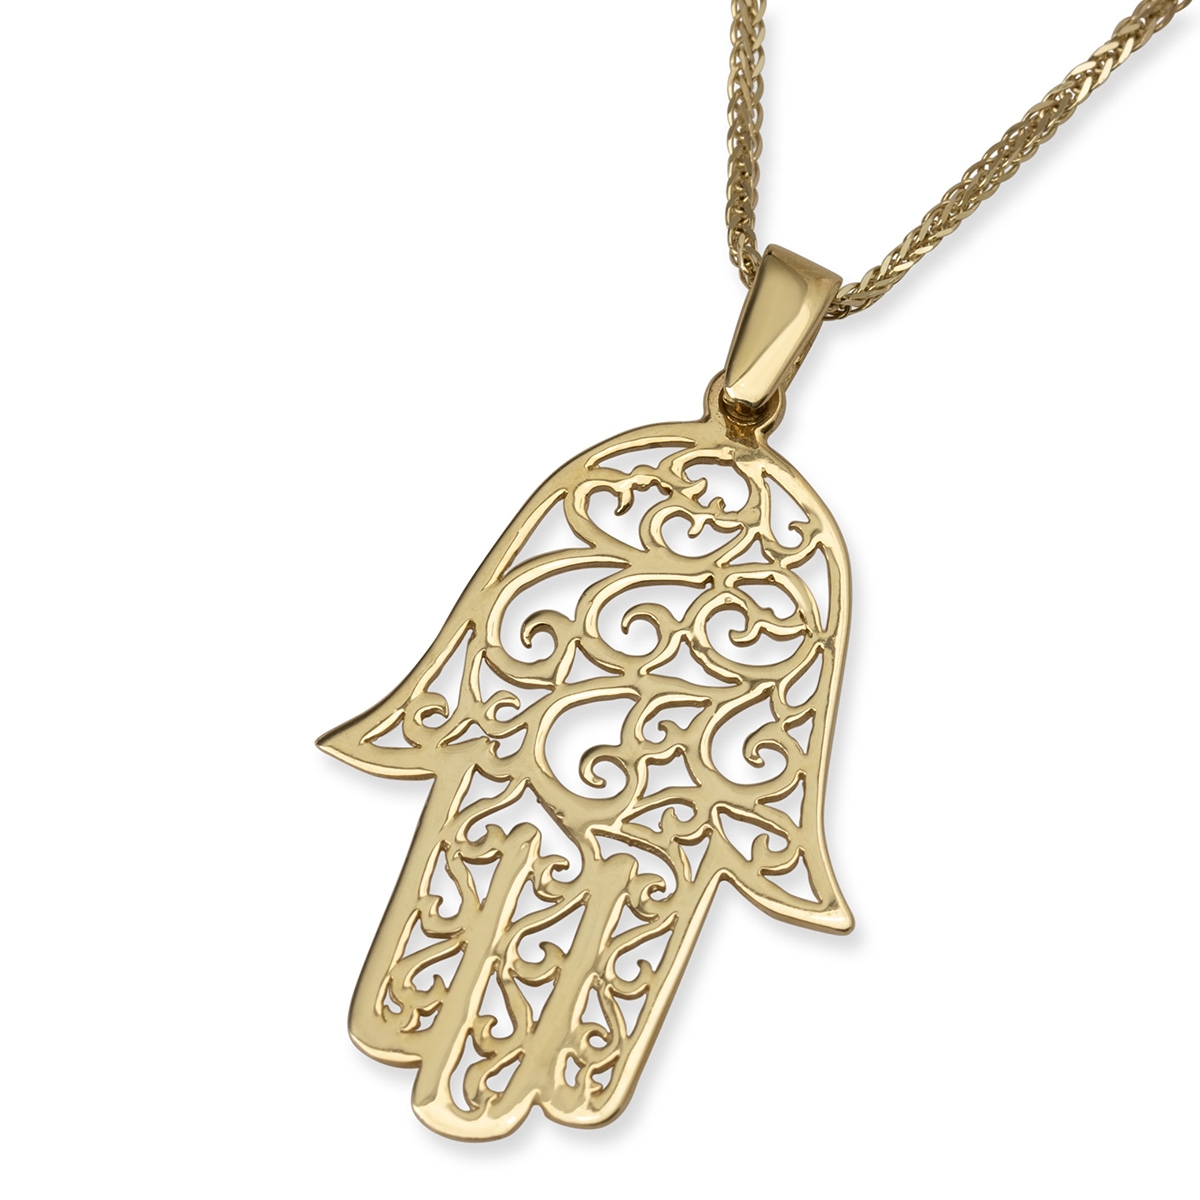 14K Yellow Gold Hamsa Pendant Necklace With Ornate Filigree Design - 1